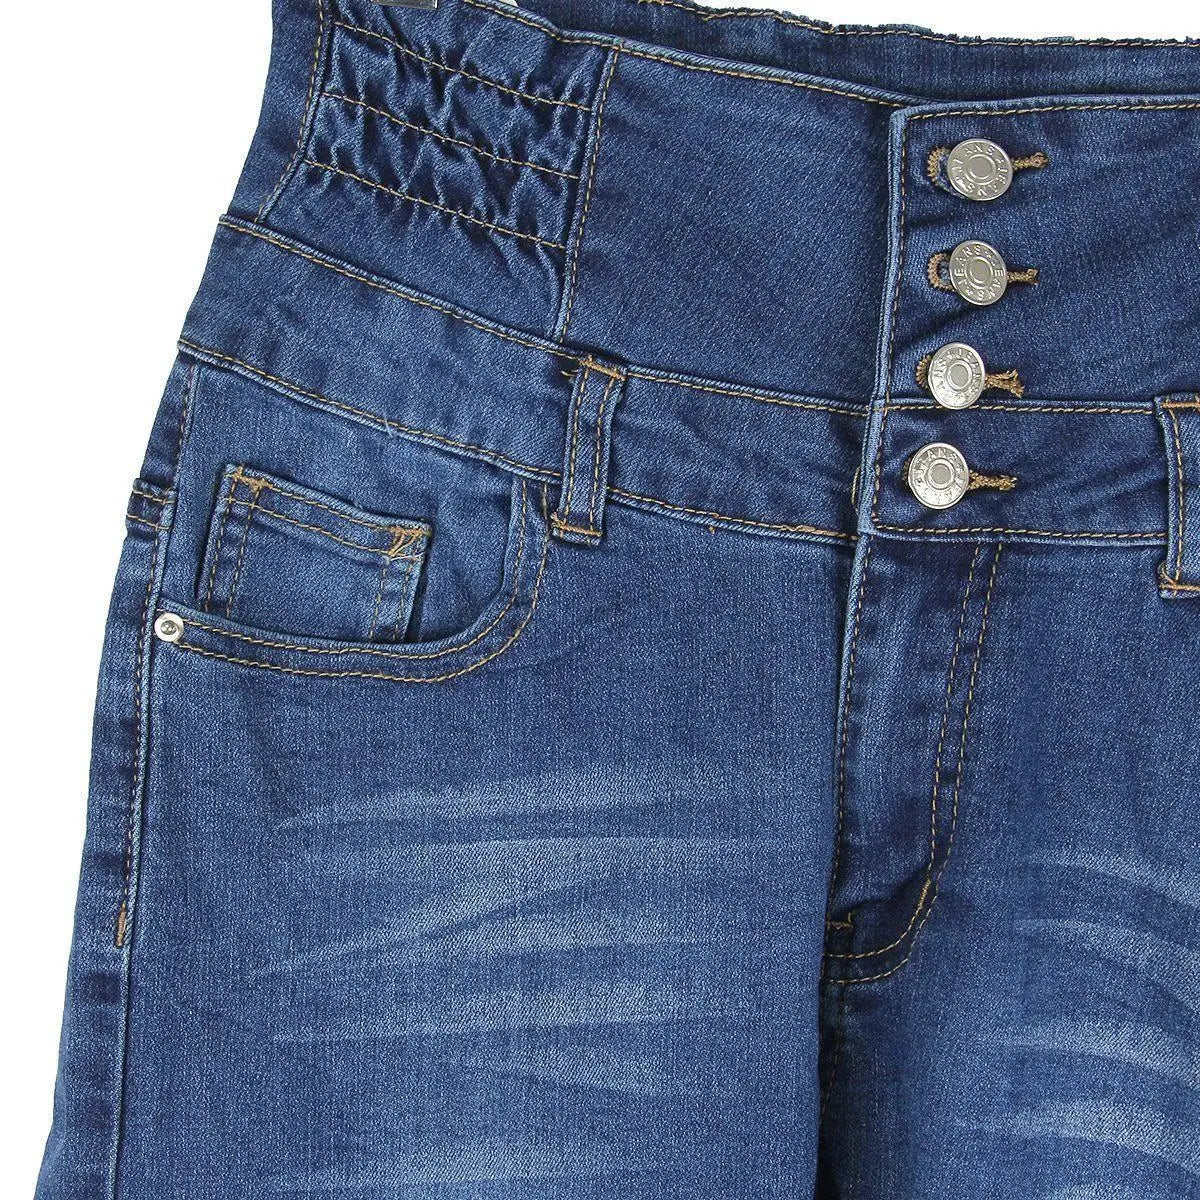 2023 Newest Hot High Quality Wholesale Woman Denim Pencil Pants Top Brand Stretch Jeans High Waist Pants Women High Waist Jeans